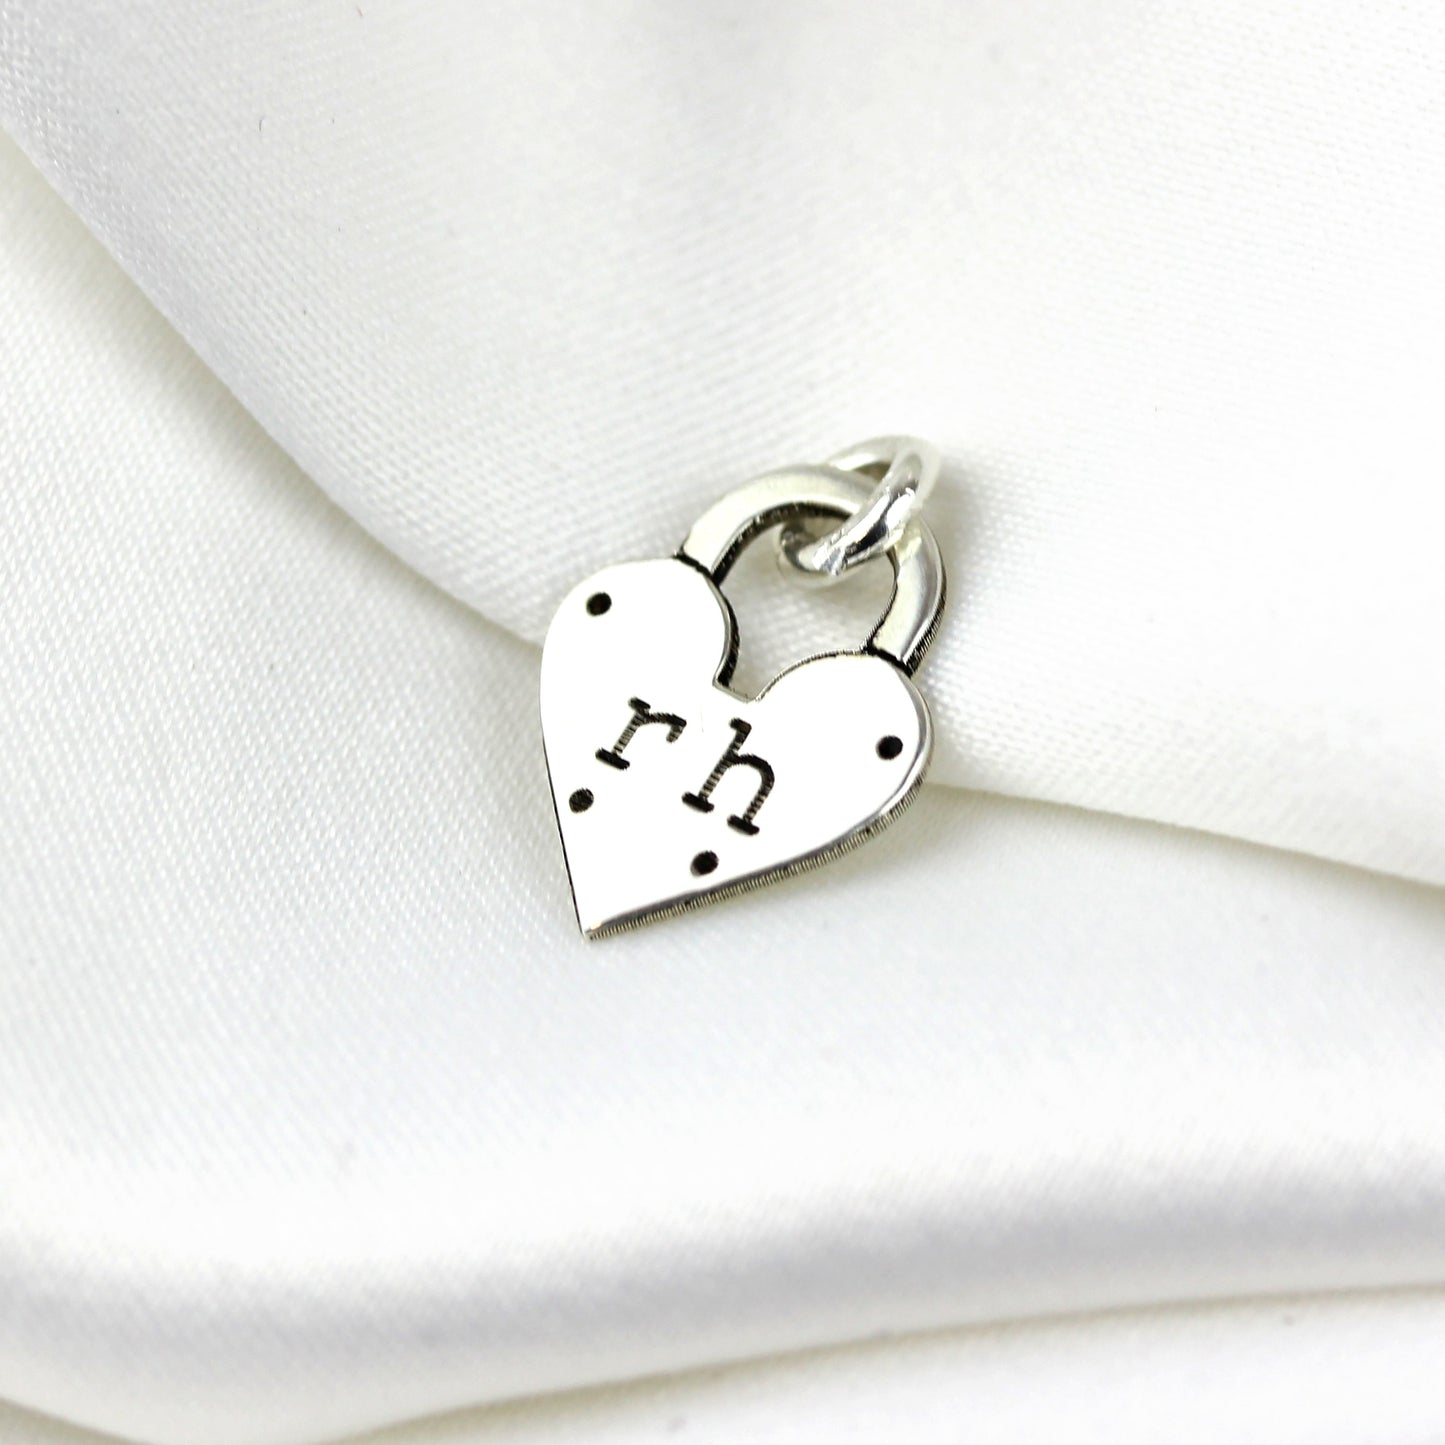 Simple Bespoke Sterling Silver Initials Heart Padlock Charm